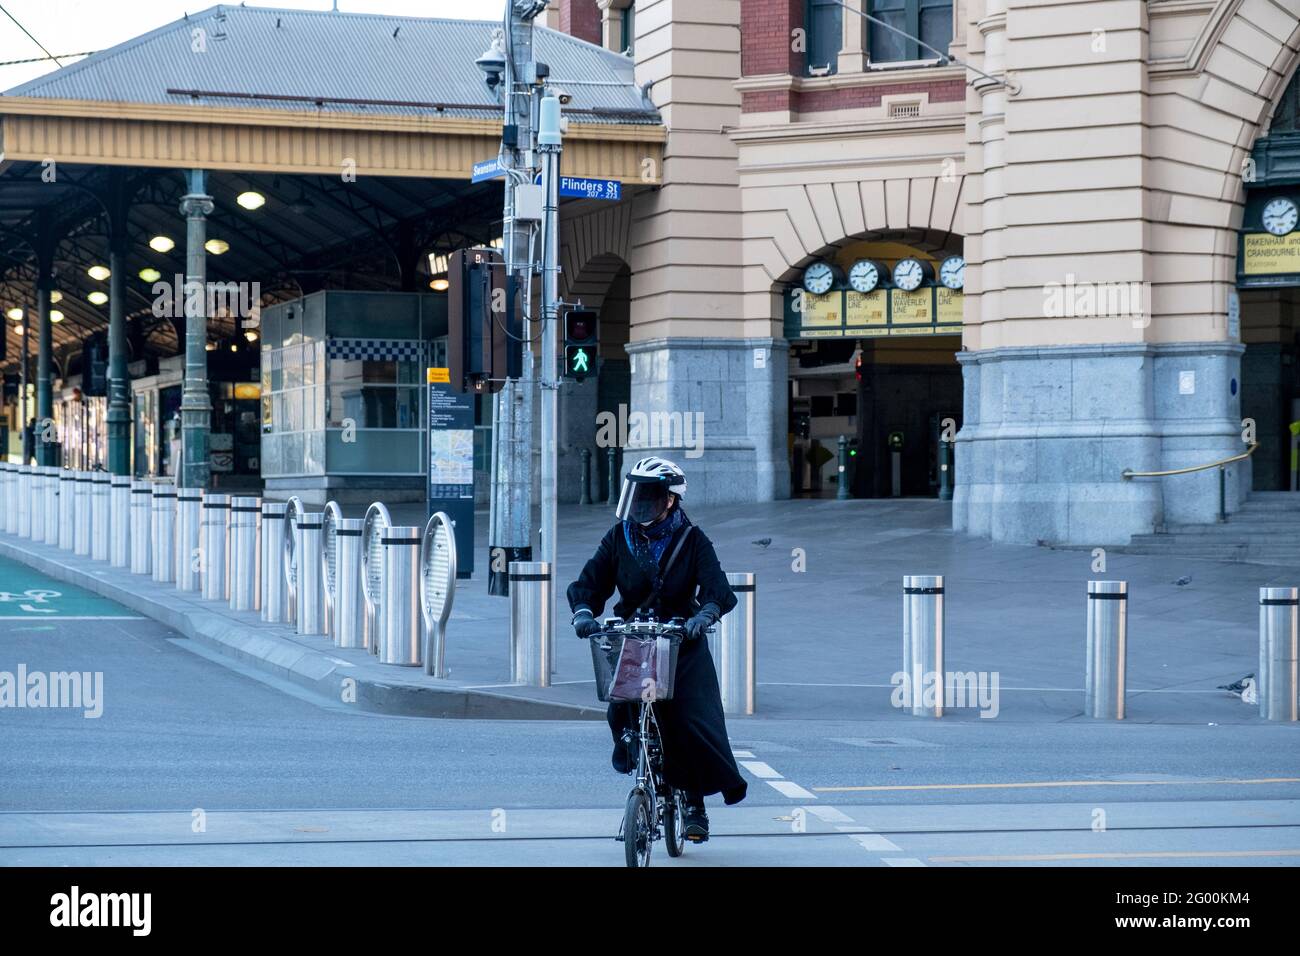 The streets are empty around Flinders Street Station during the latest coronavirus lockdown. Stock Photo